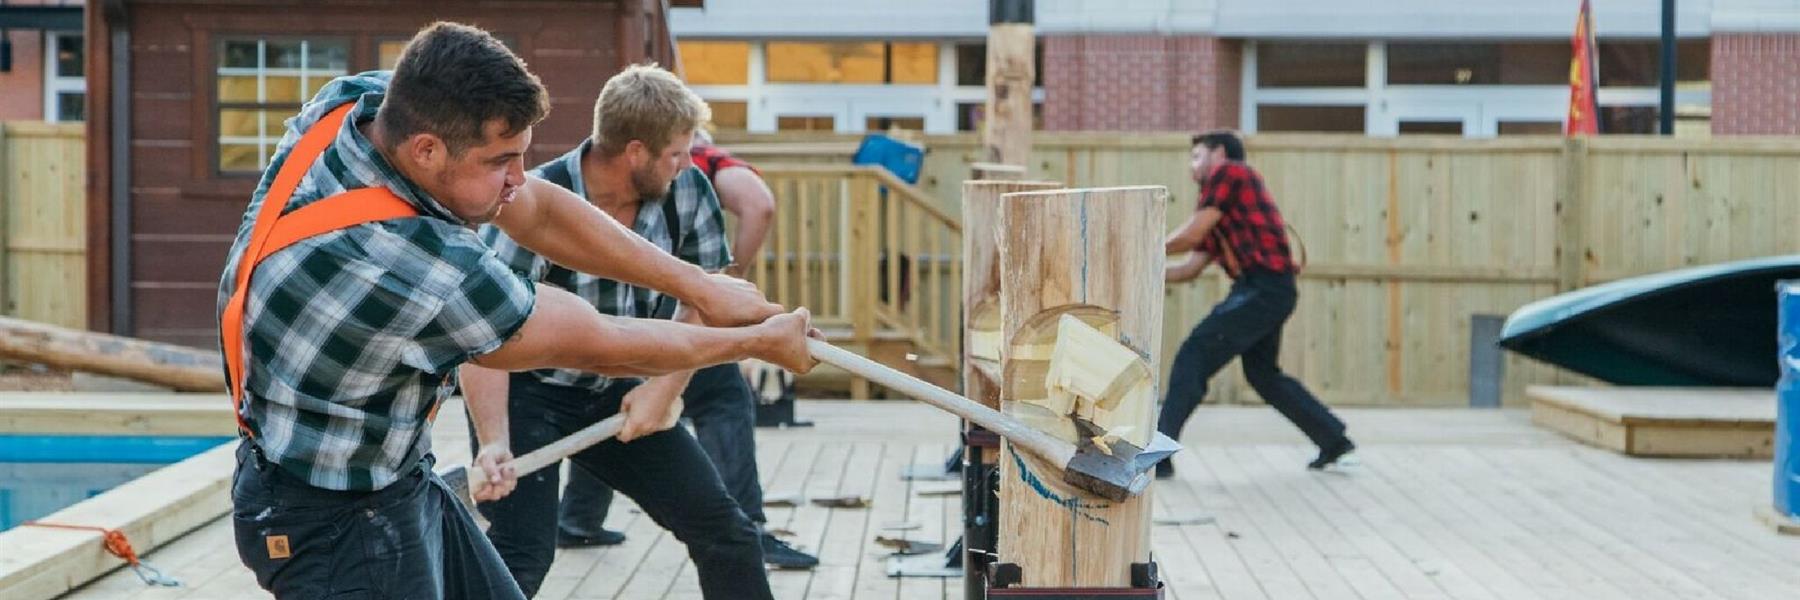 Paula Deen's Lumberjack Feud Show in Pigeon Forge, Tennessee